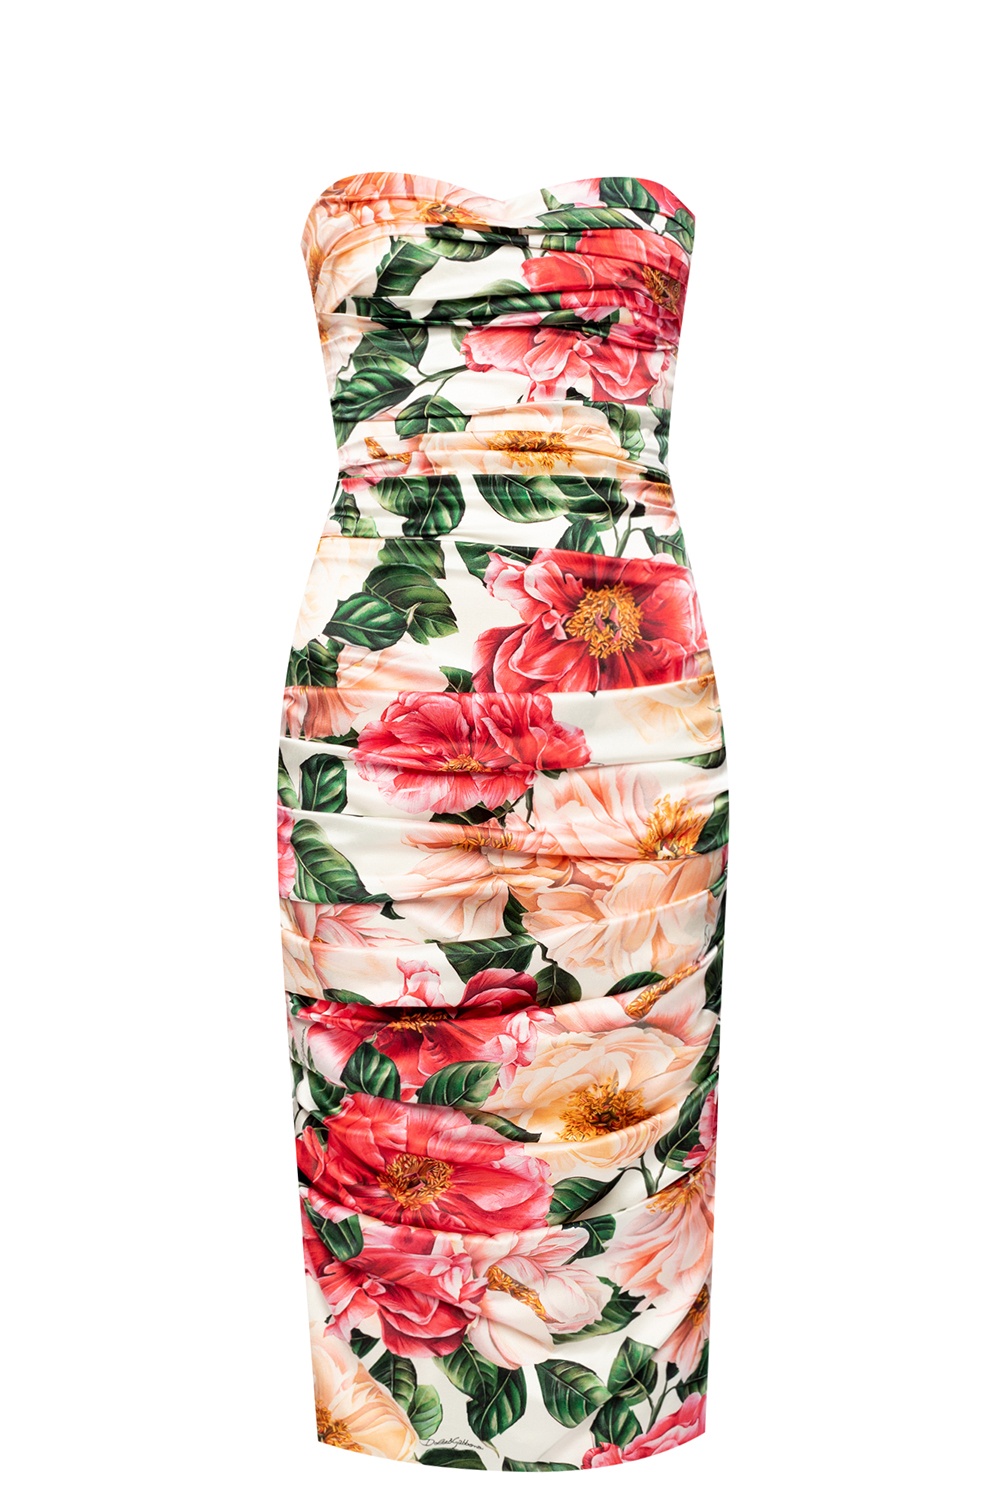 Gabbana Floral-printed silk dress ...